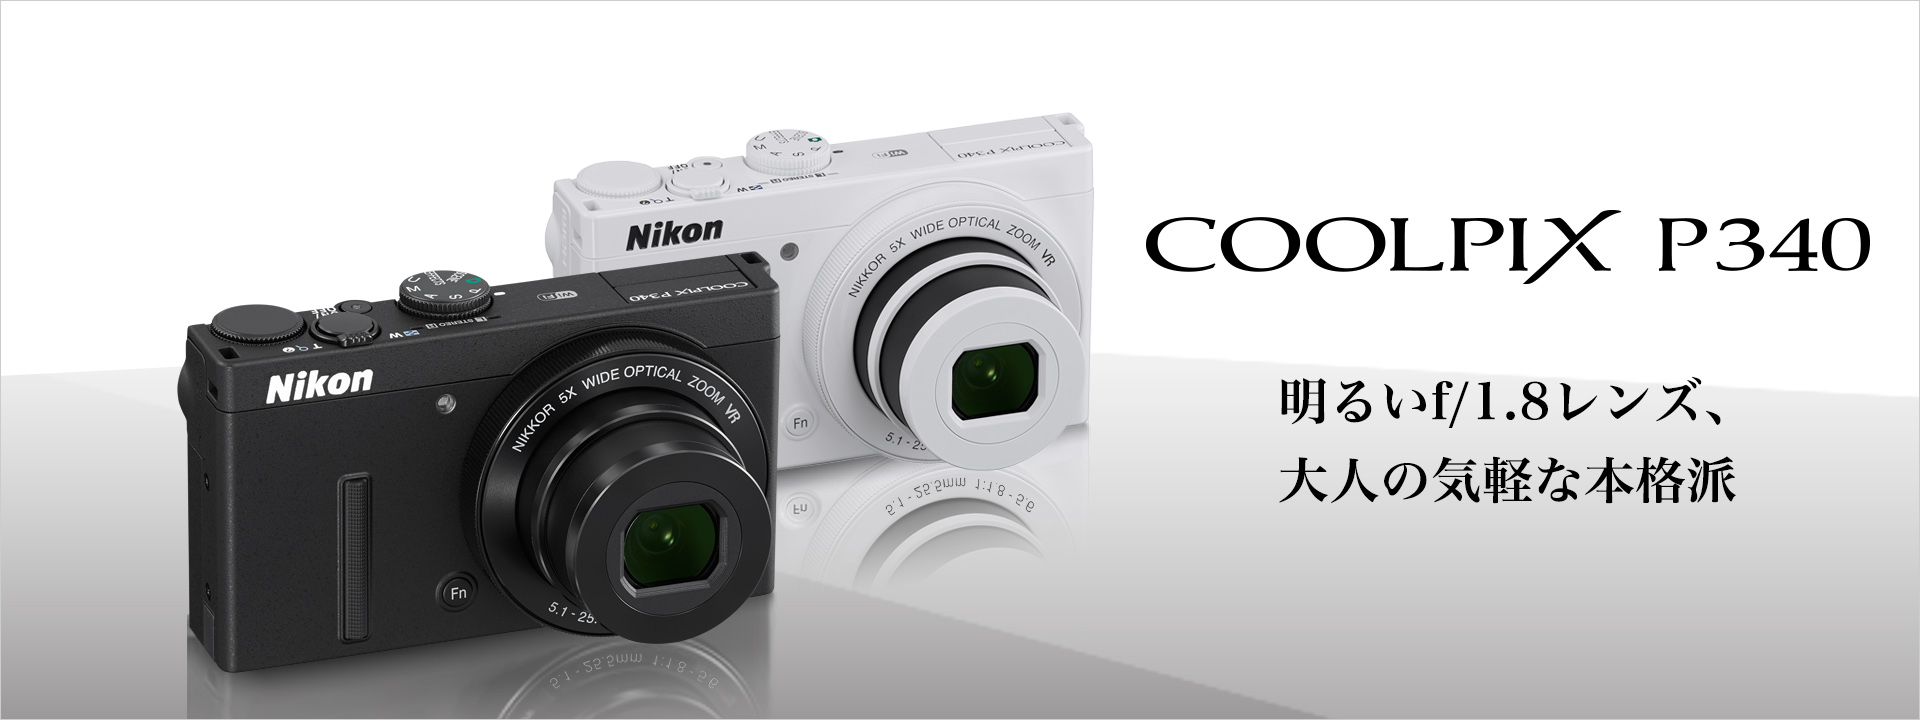 8,610円Nikon COOLPIX P340